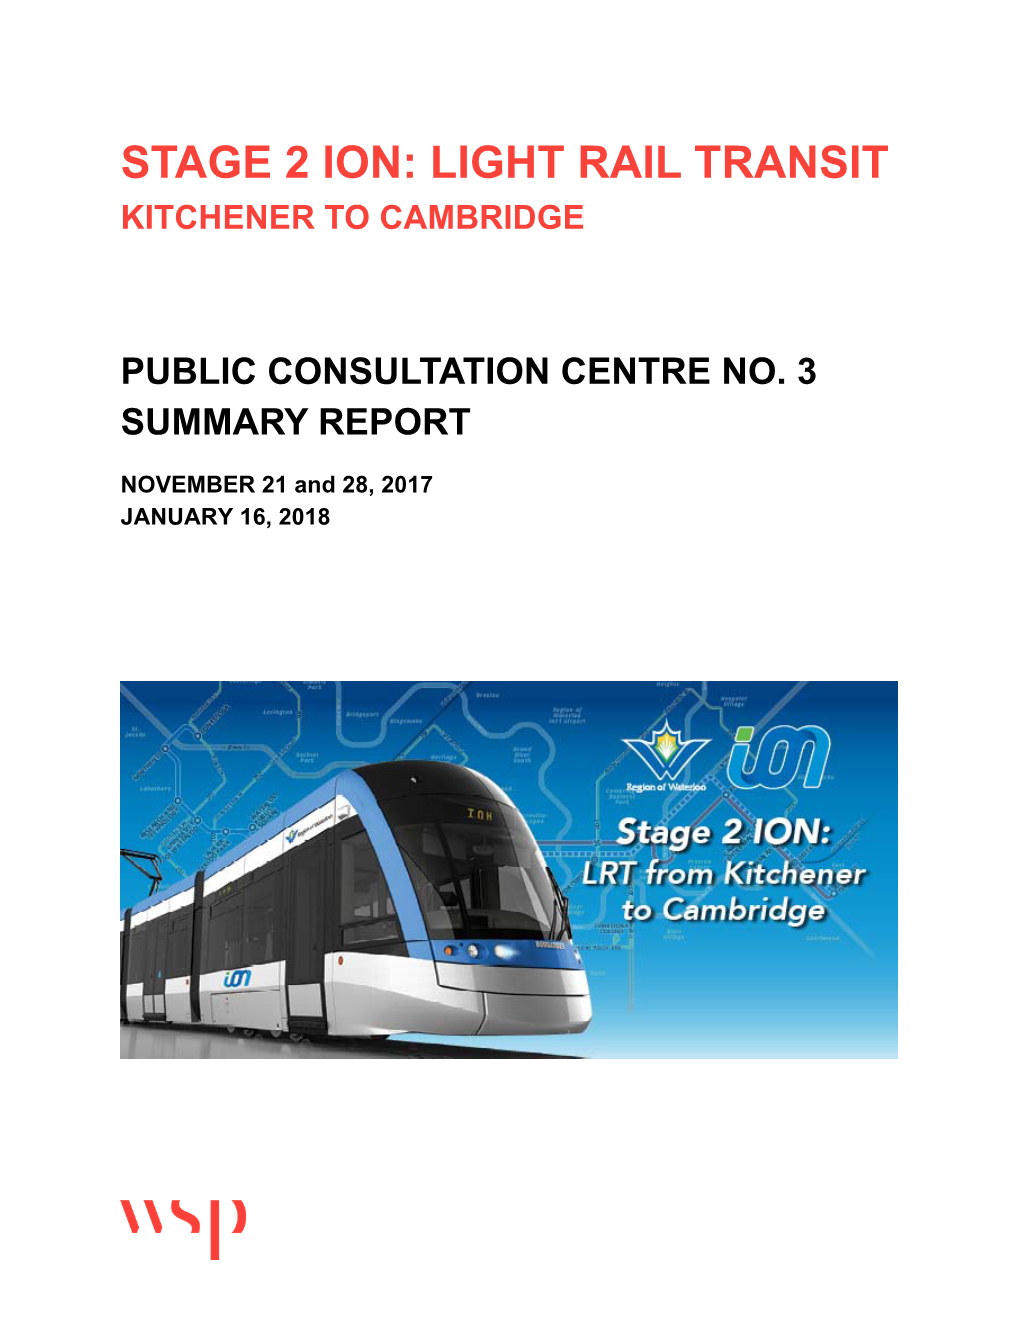 Stage 2 Ion: Light Rail Transit Kitchener to Cambridge